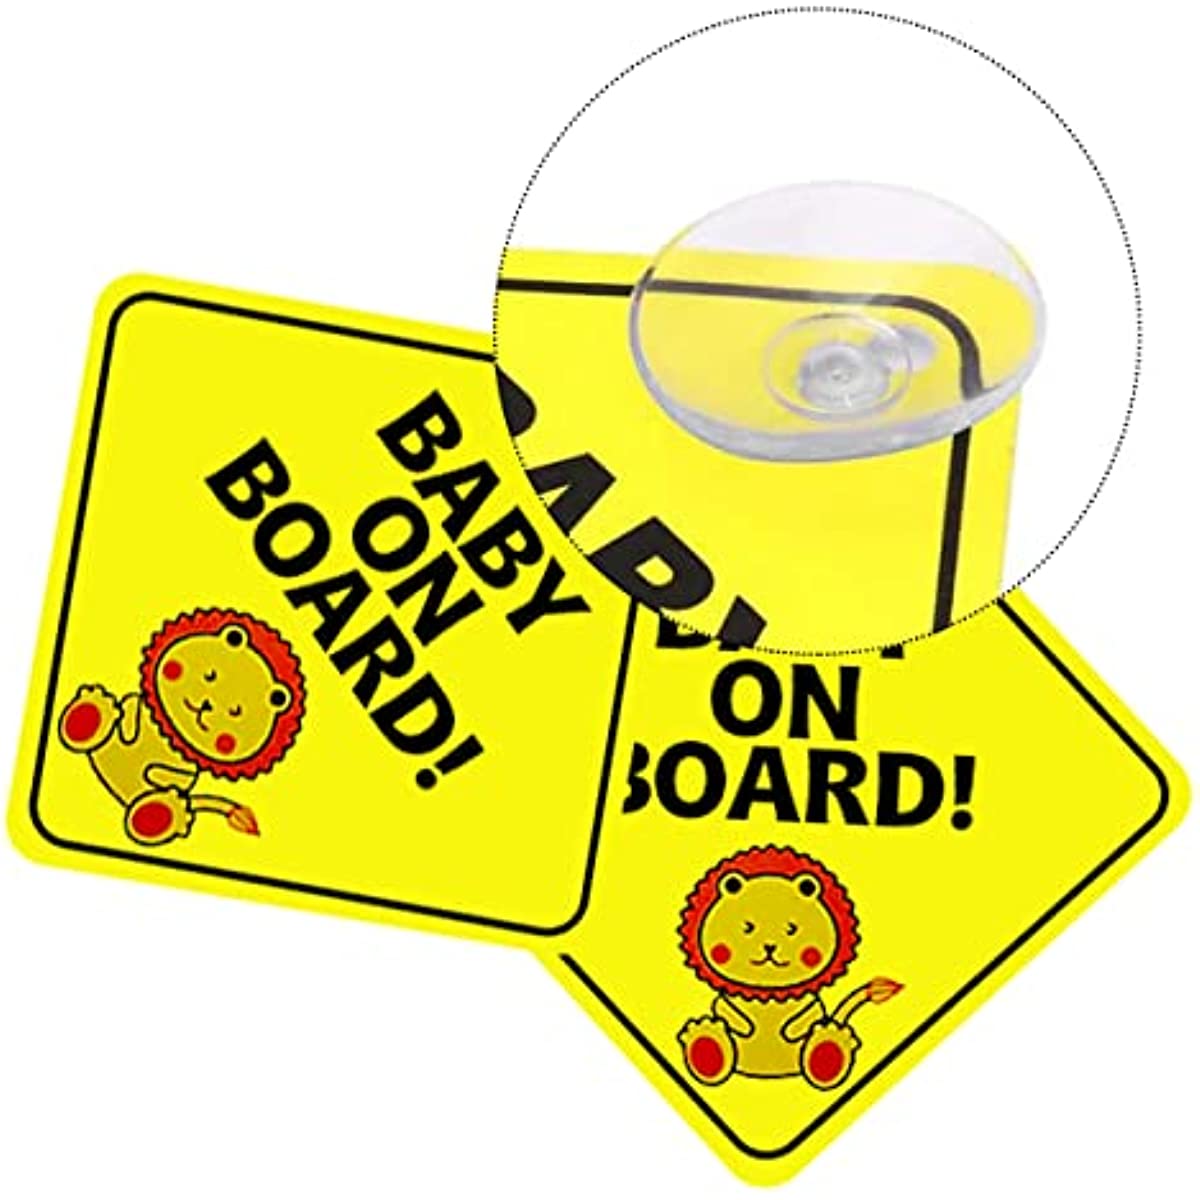 Baby on board - Baby On Board Sticker Caution Sign - Sticker